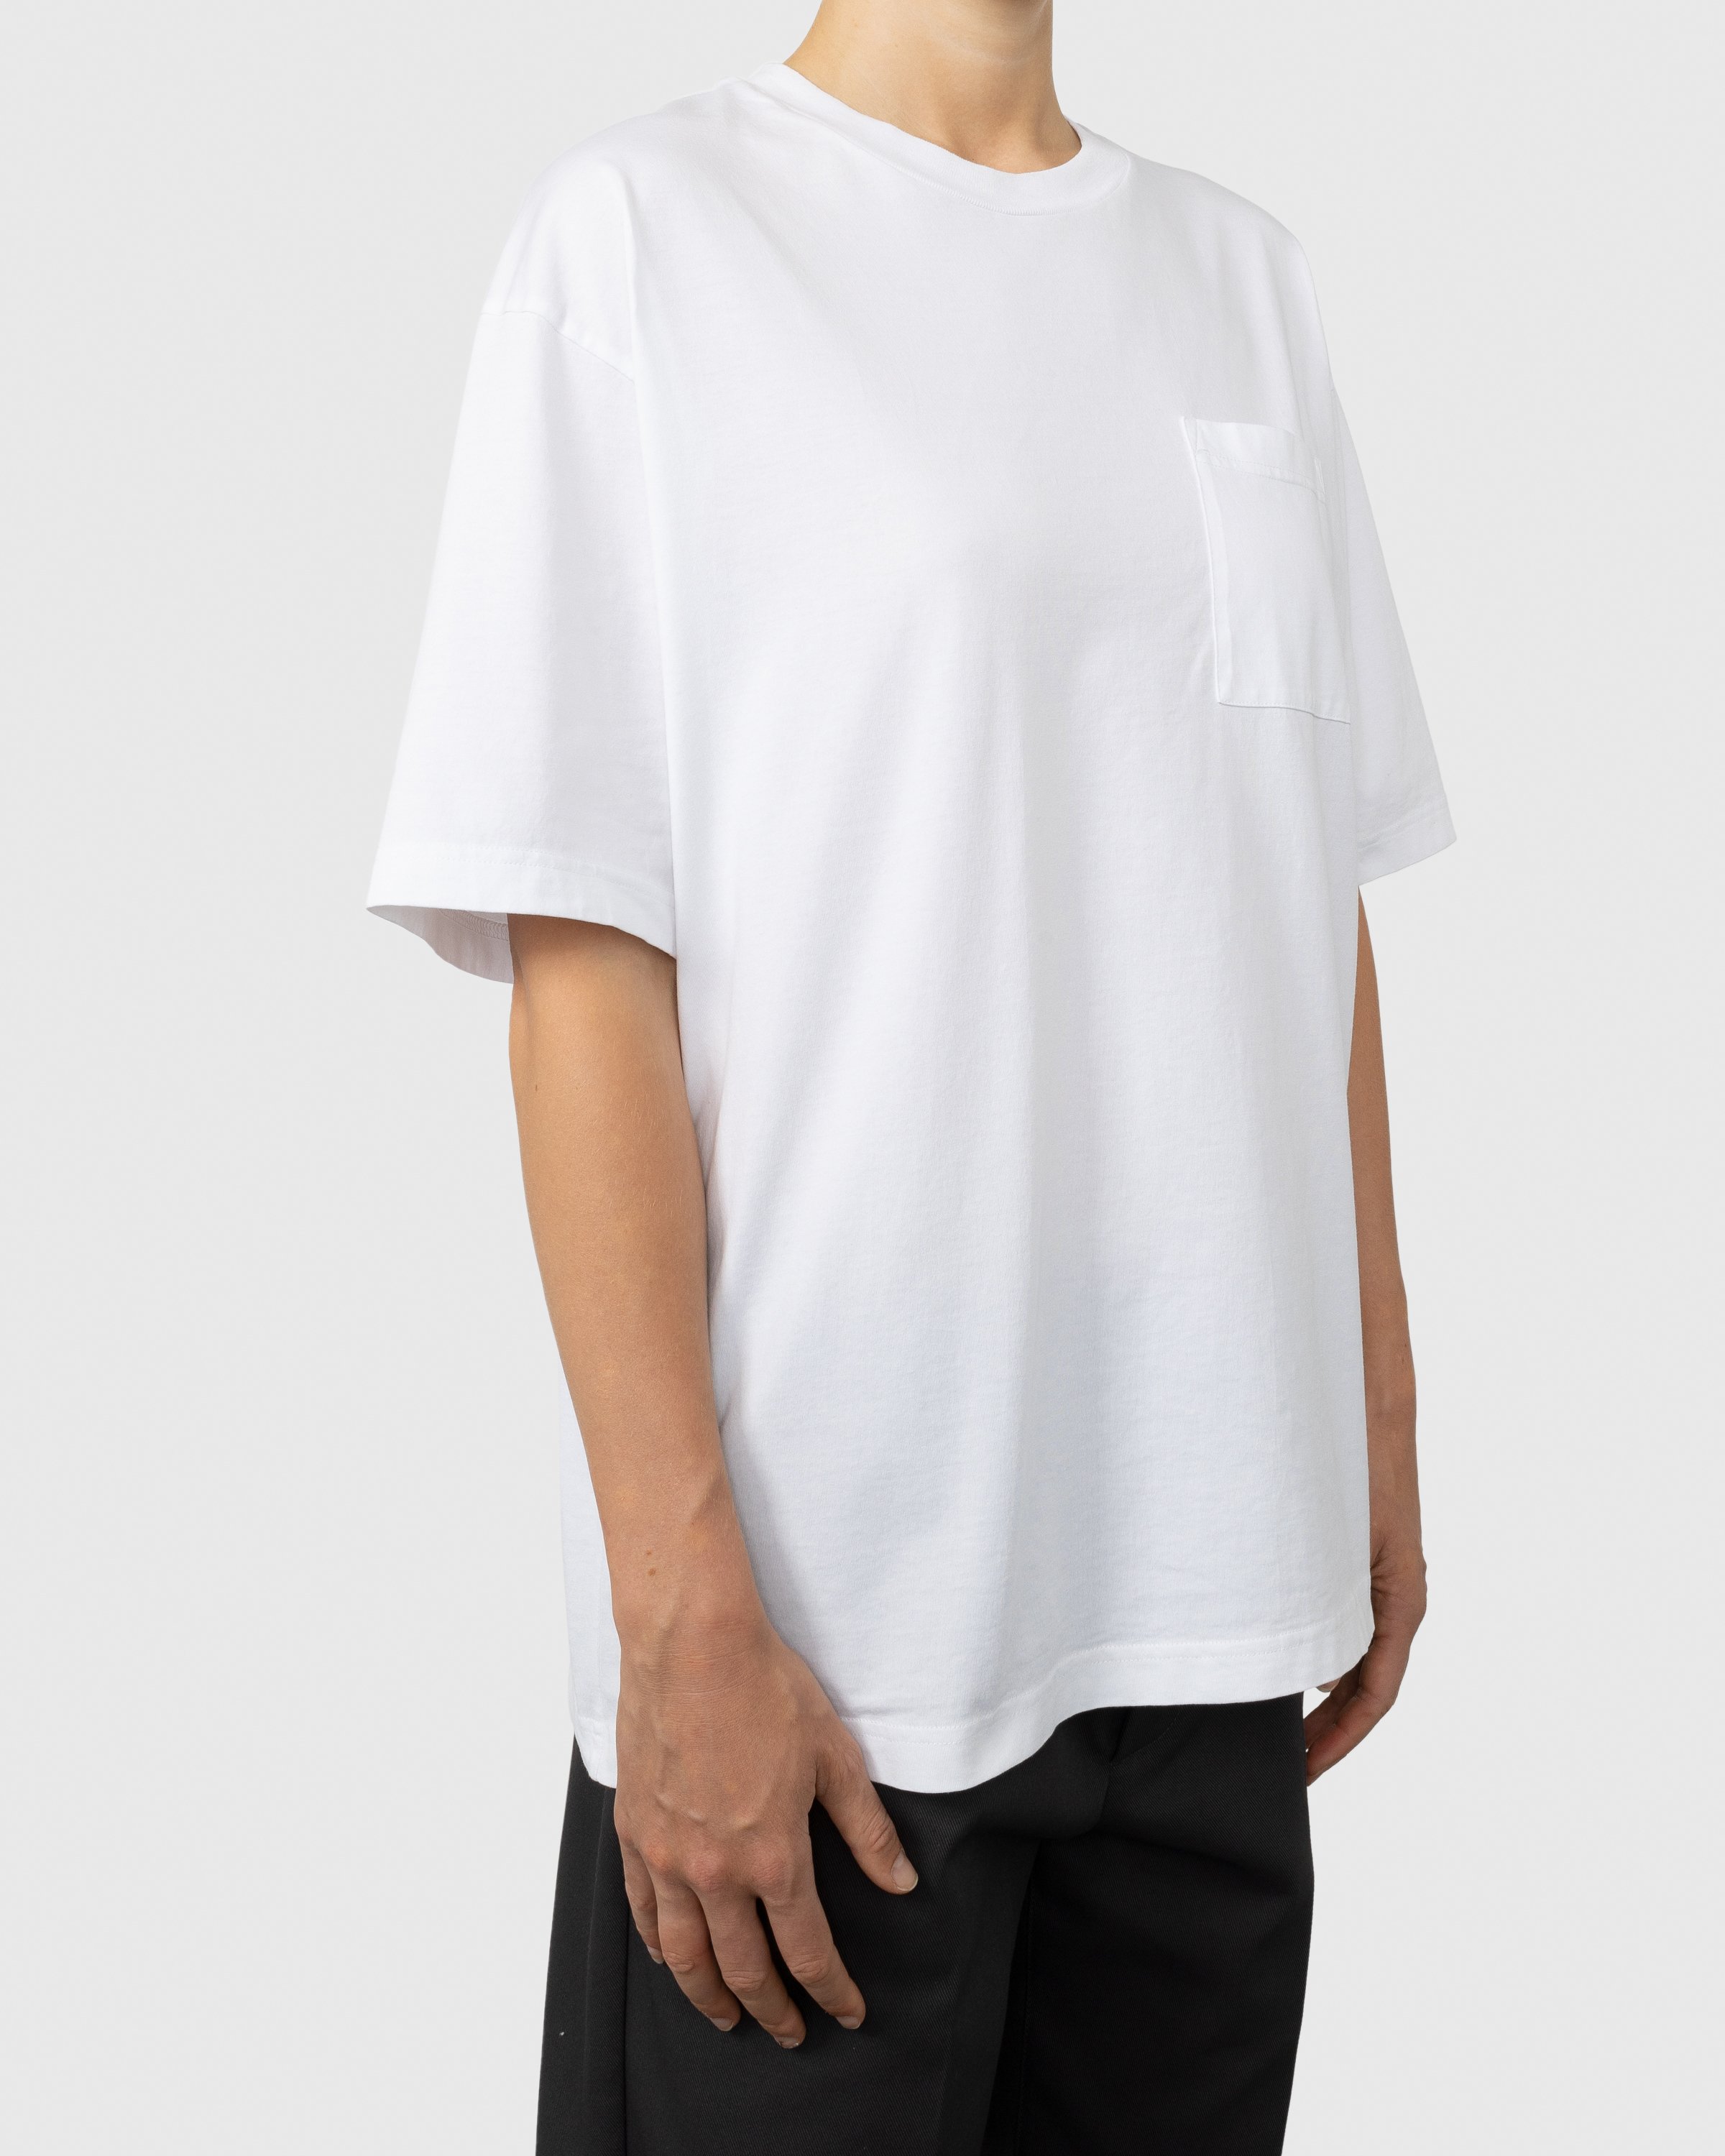 Acne Studios - Organic Cotton Pocket T-Shirt White - Clothing - White - Image 3